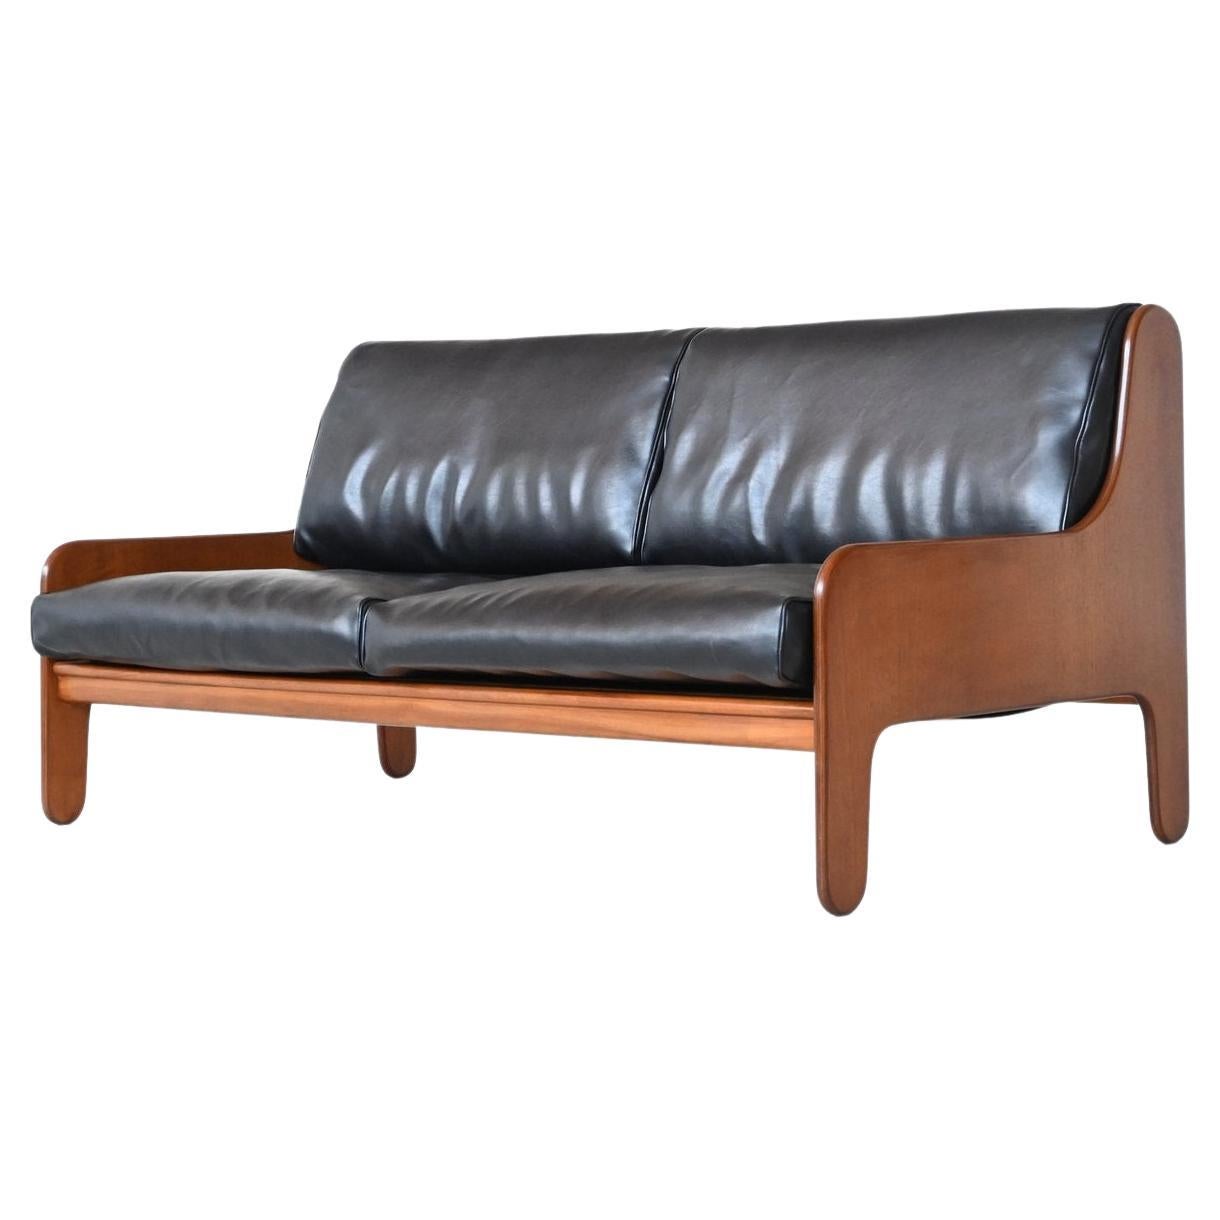 Marco Zanuso Baronet two-seat sofa in teak and black leather Arflex Italy 1964 